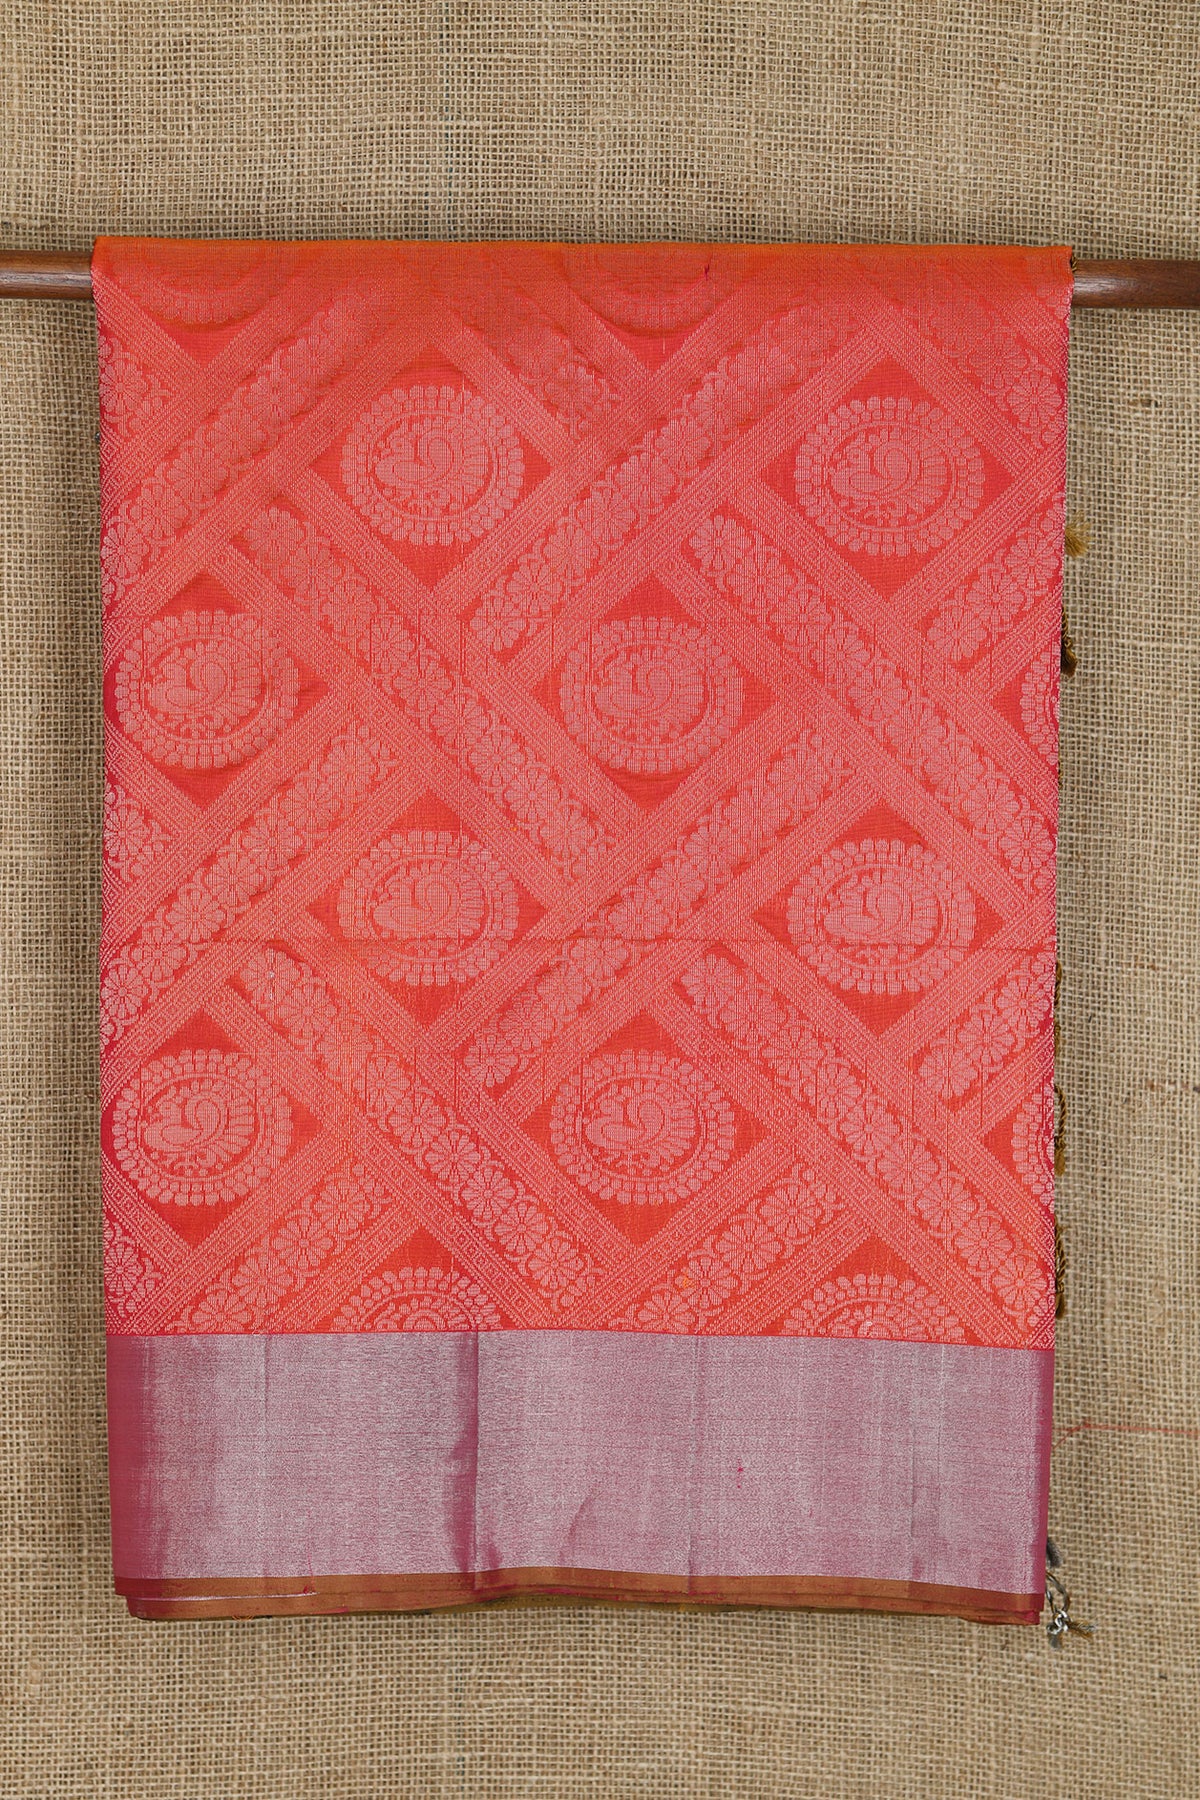 Bavanchi Border In Peacock Design Apple Red Soft Silk Saree